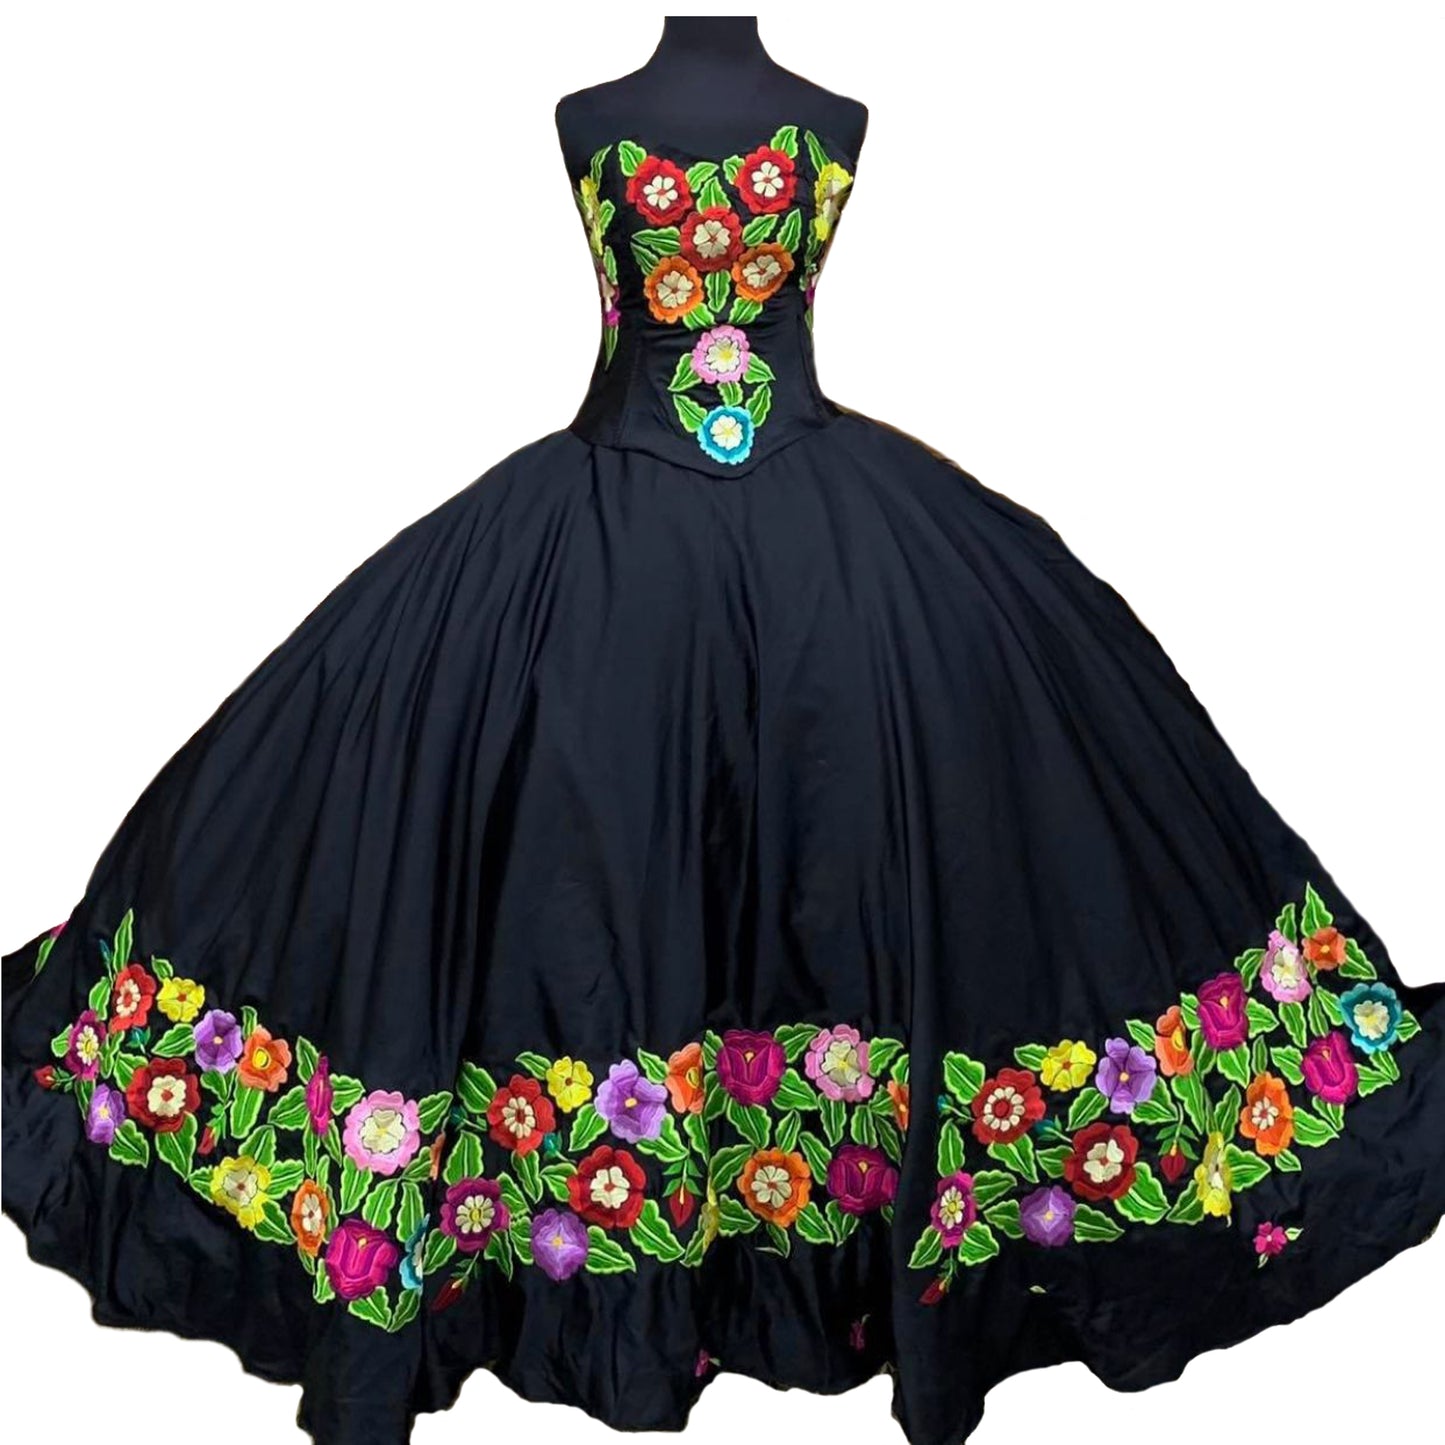 Folkloric Custom Made Dress - Floral Pattern Black